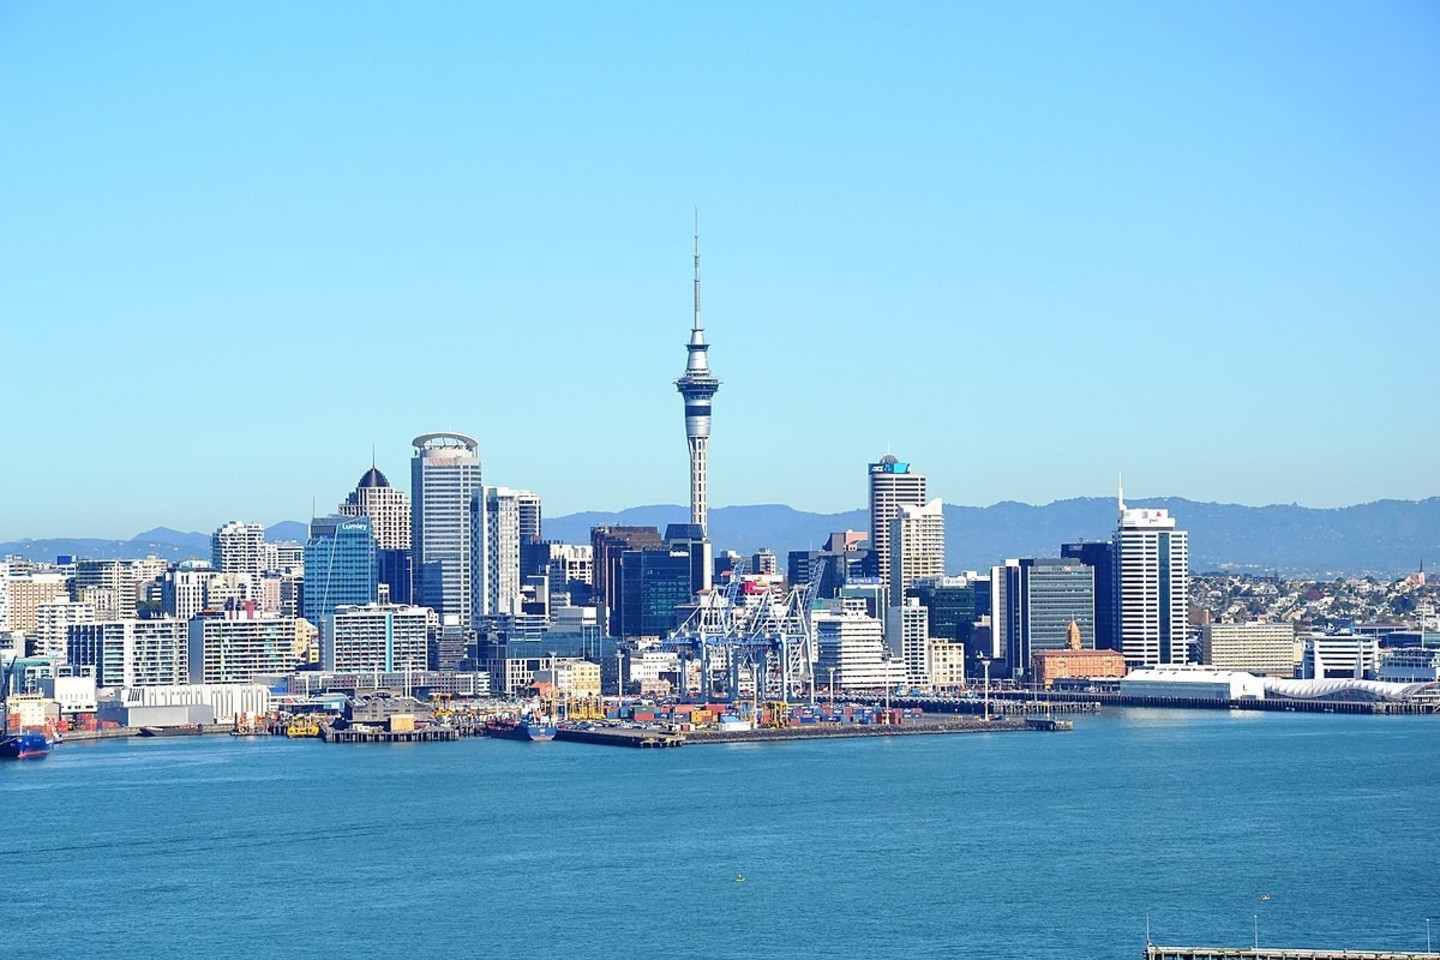  Aucklandas <br>Pier Alessio Rizzard/Archdaily nuotr.